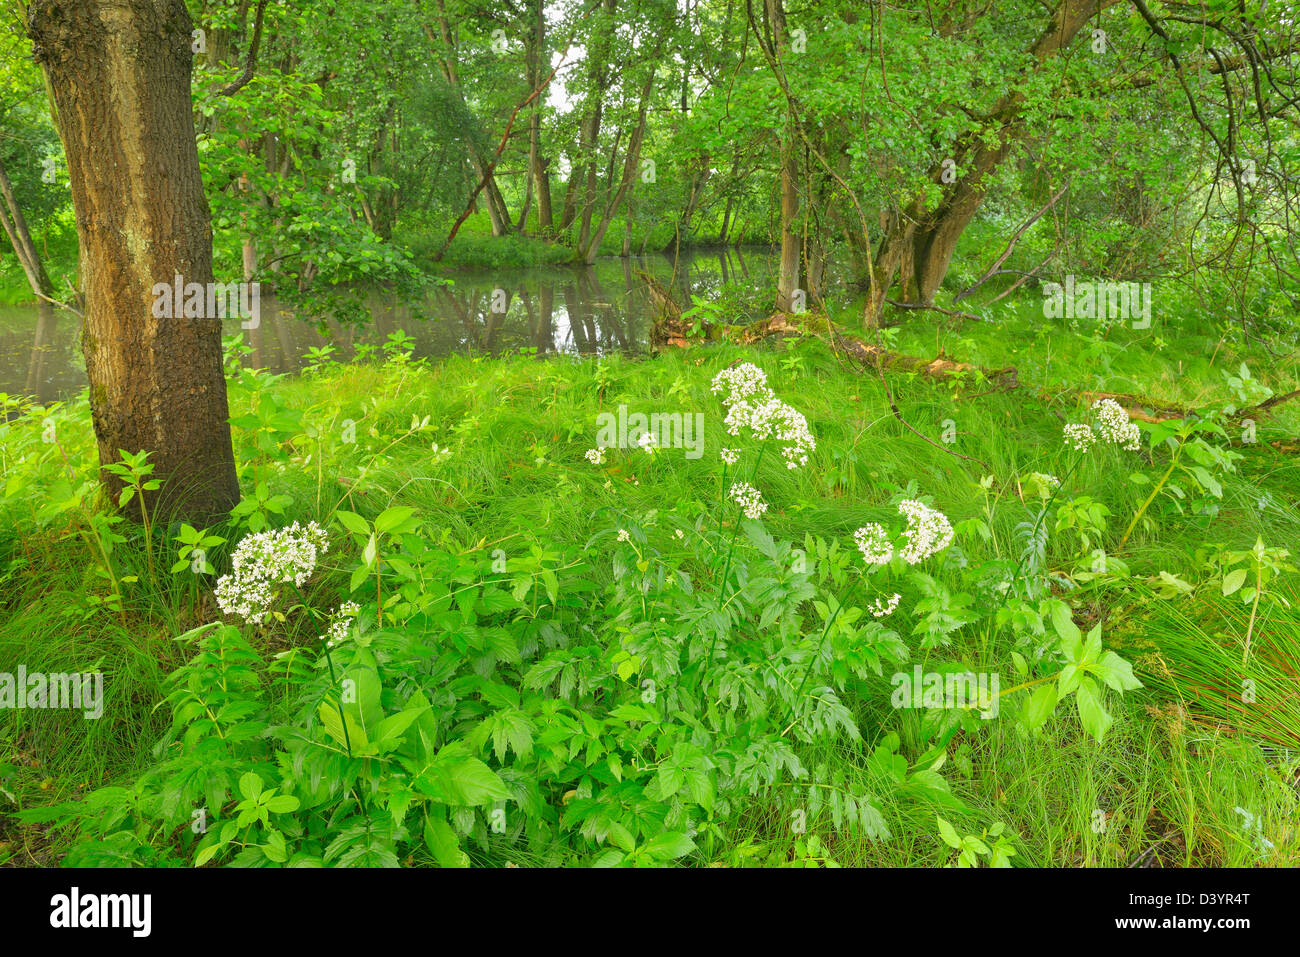 Oxbow of River Sinn in Summer, Burgsinn, Sinntal, Lower Franconia, Bavaria, Germany Stock Photo